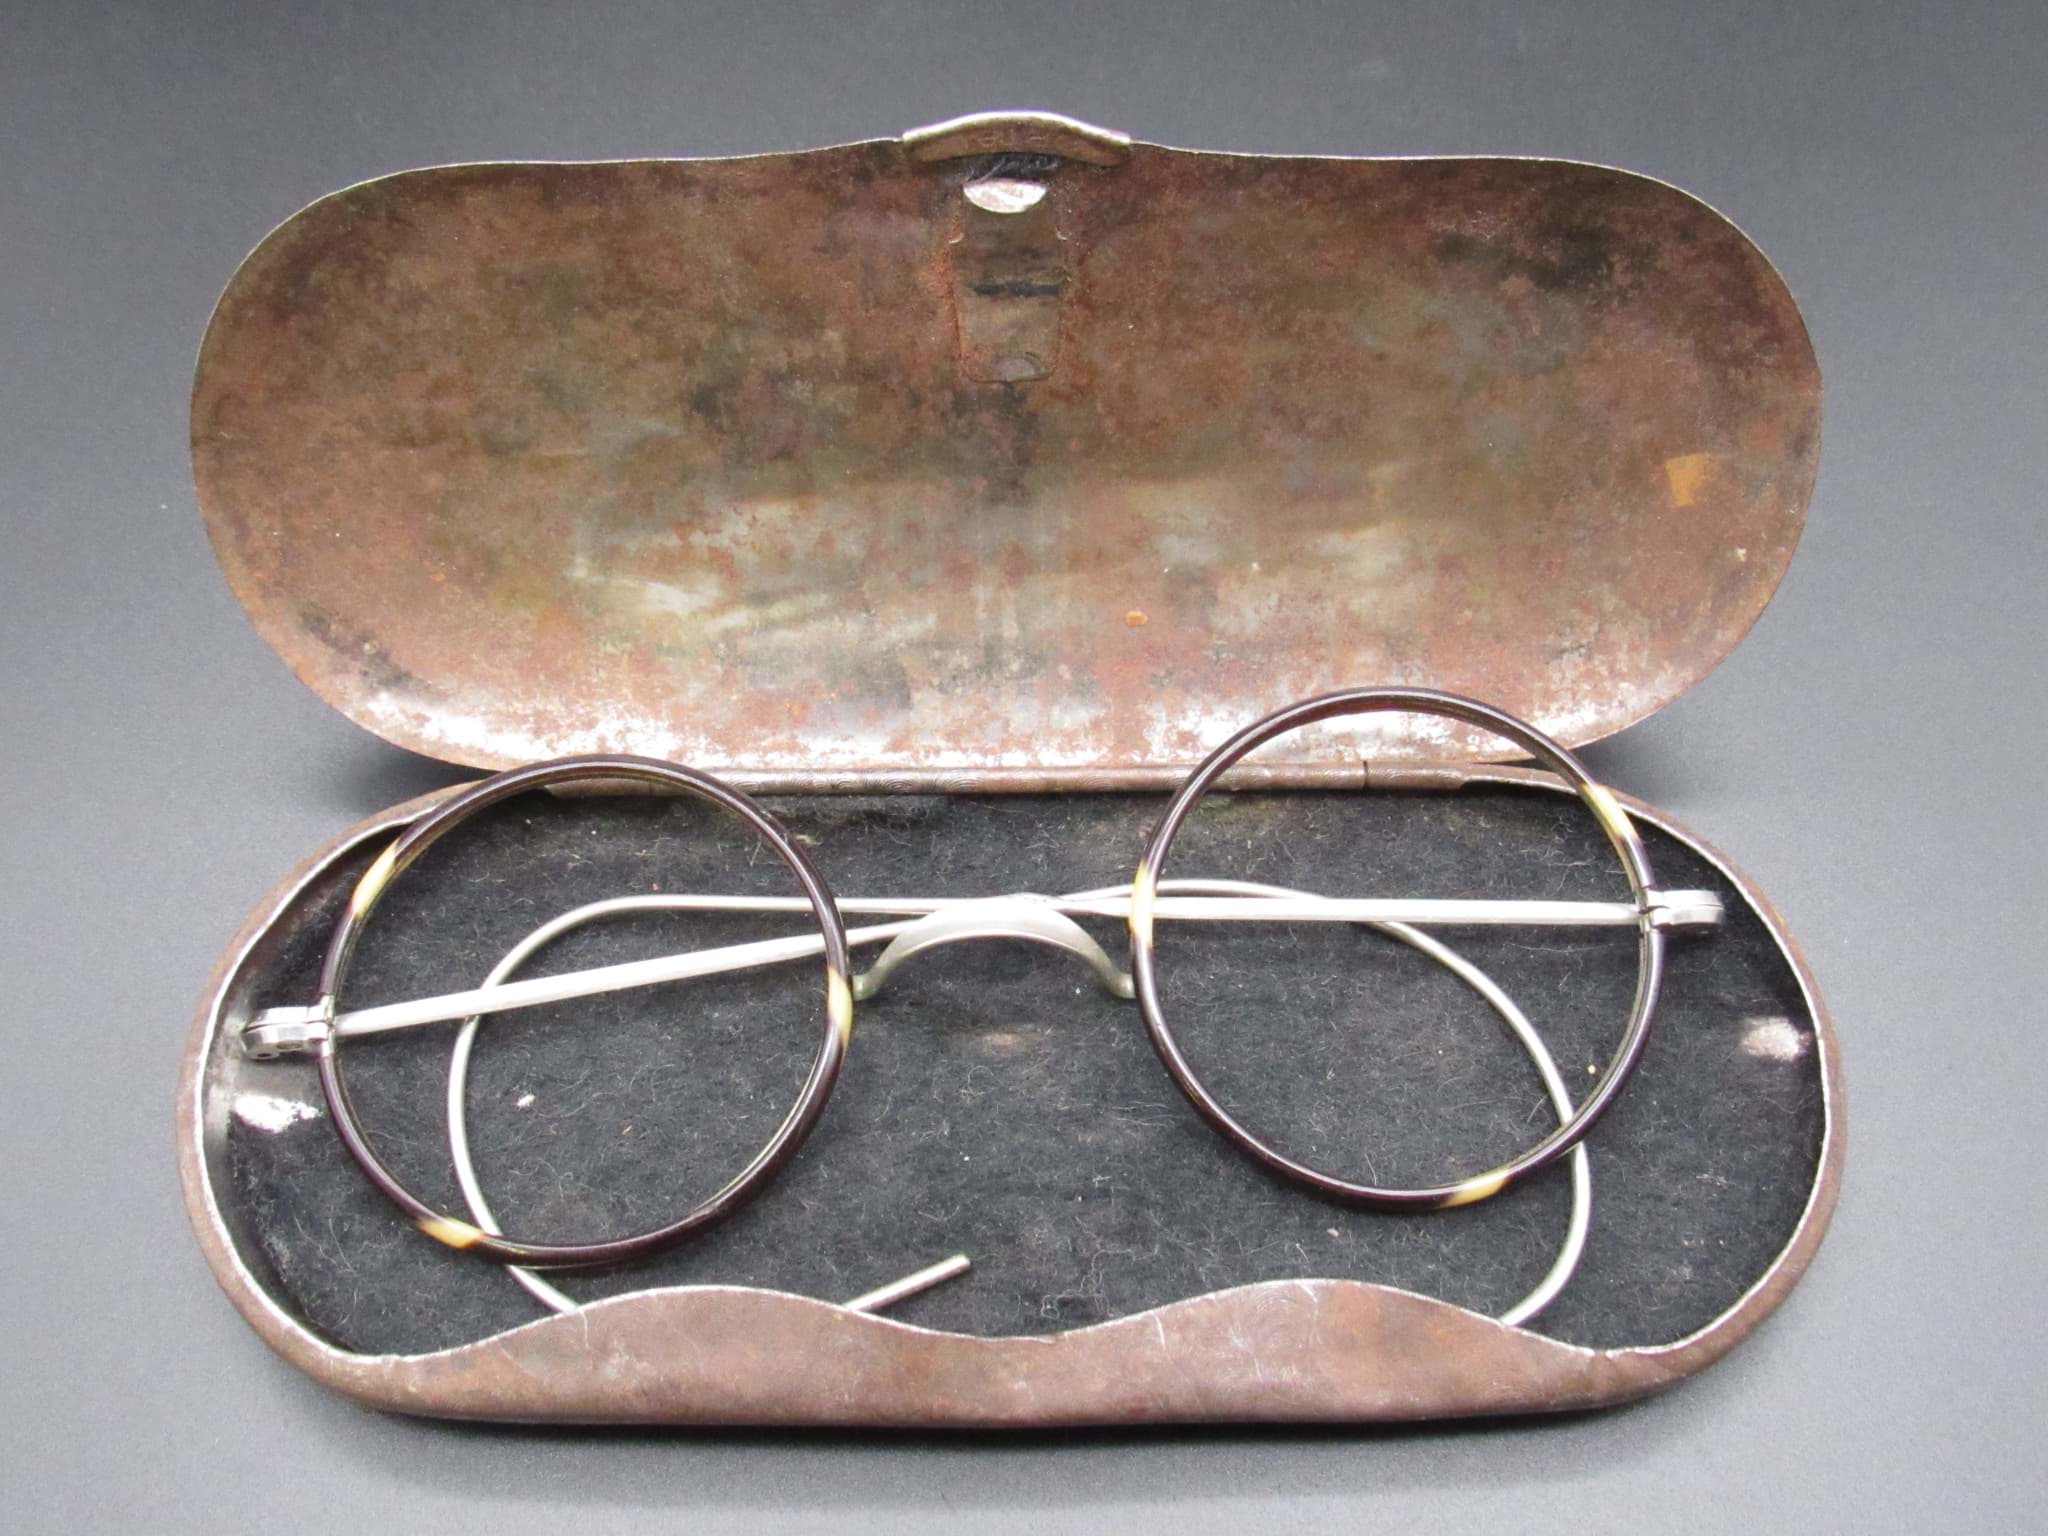 Image de Antike Zickel Brille mit Etui um 1900, Schildpatt